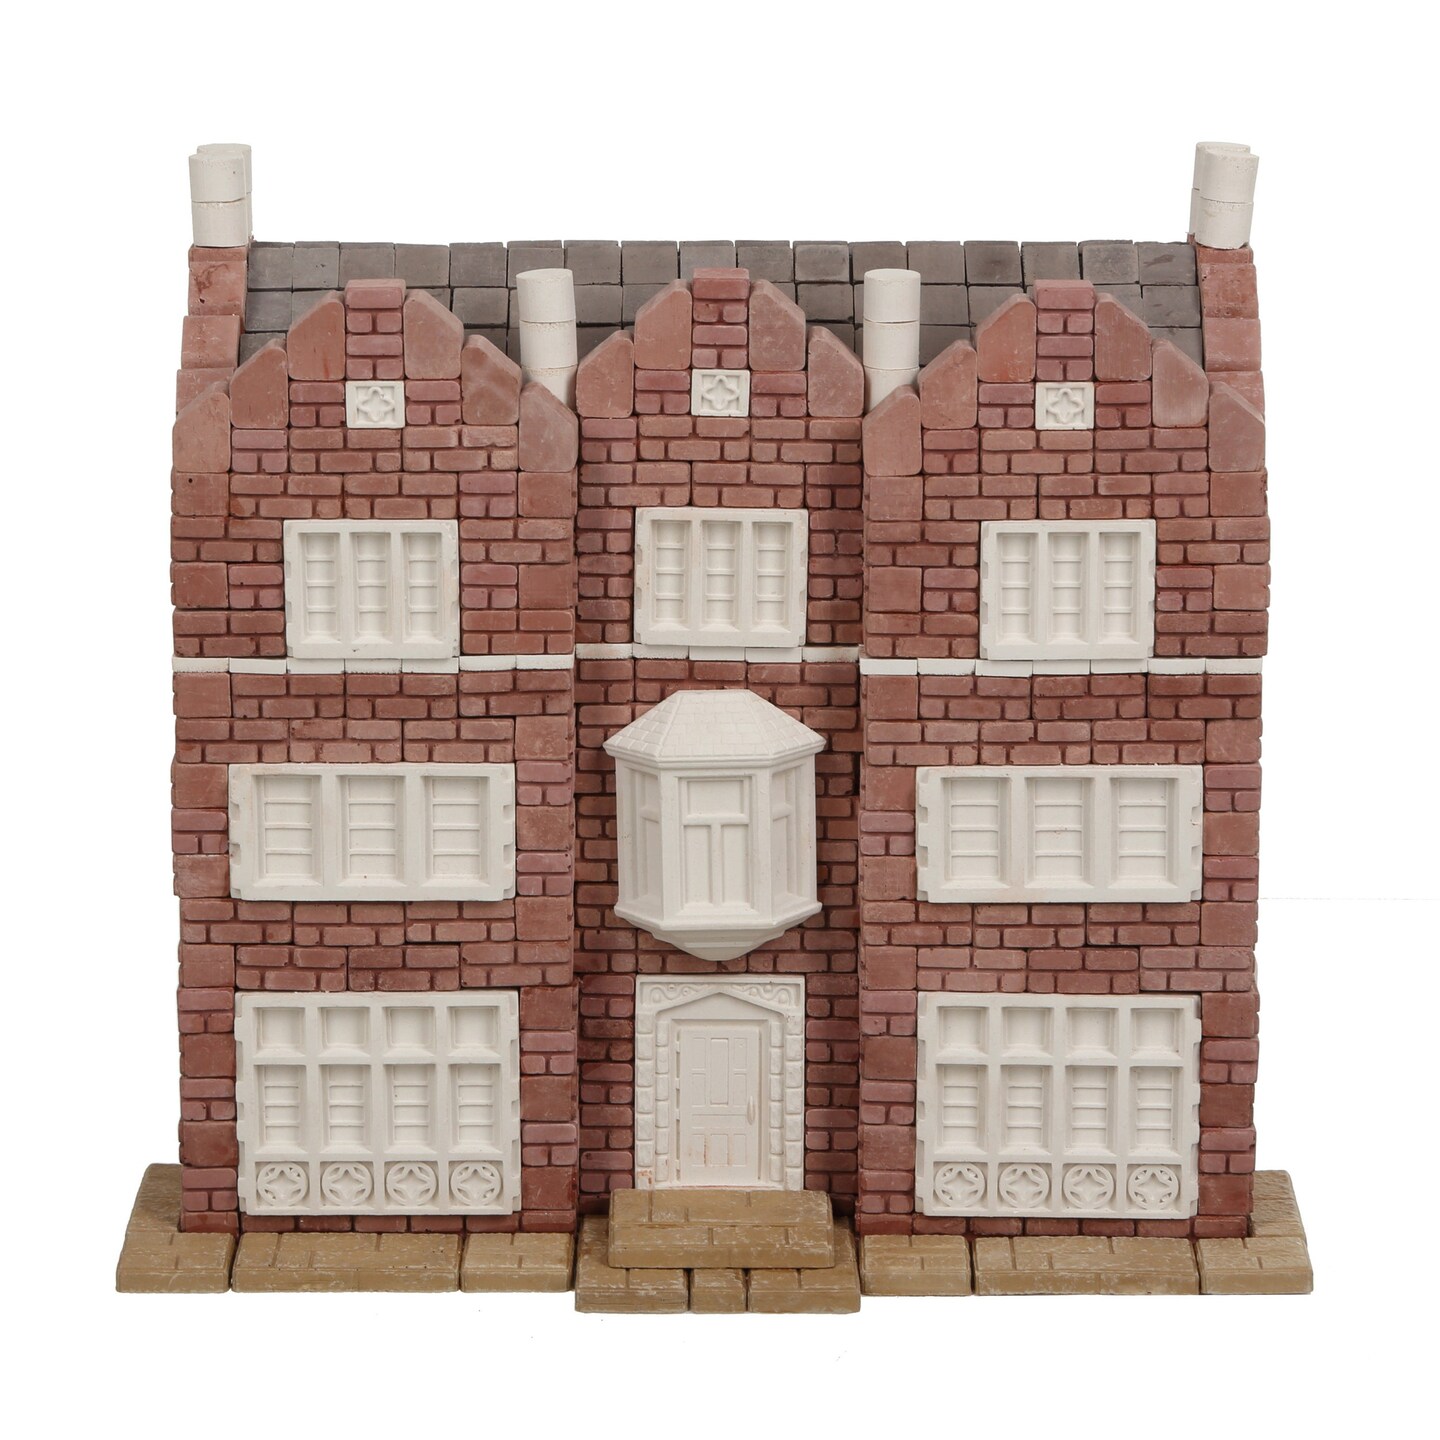 Mini bricks constructor set - Rebbe&#x27;s house